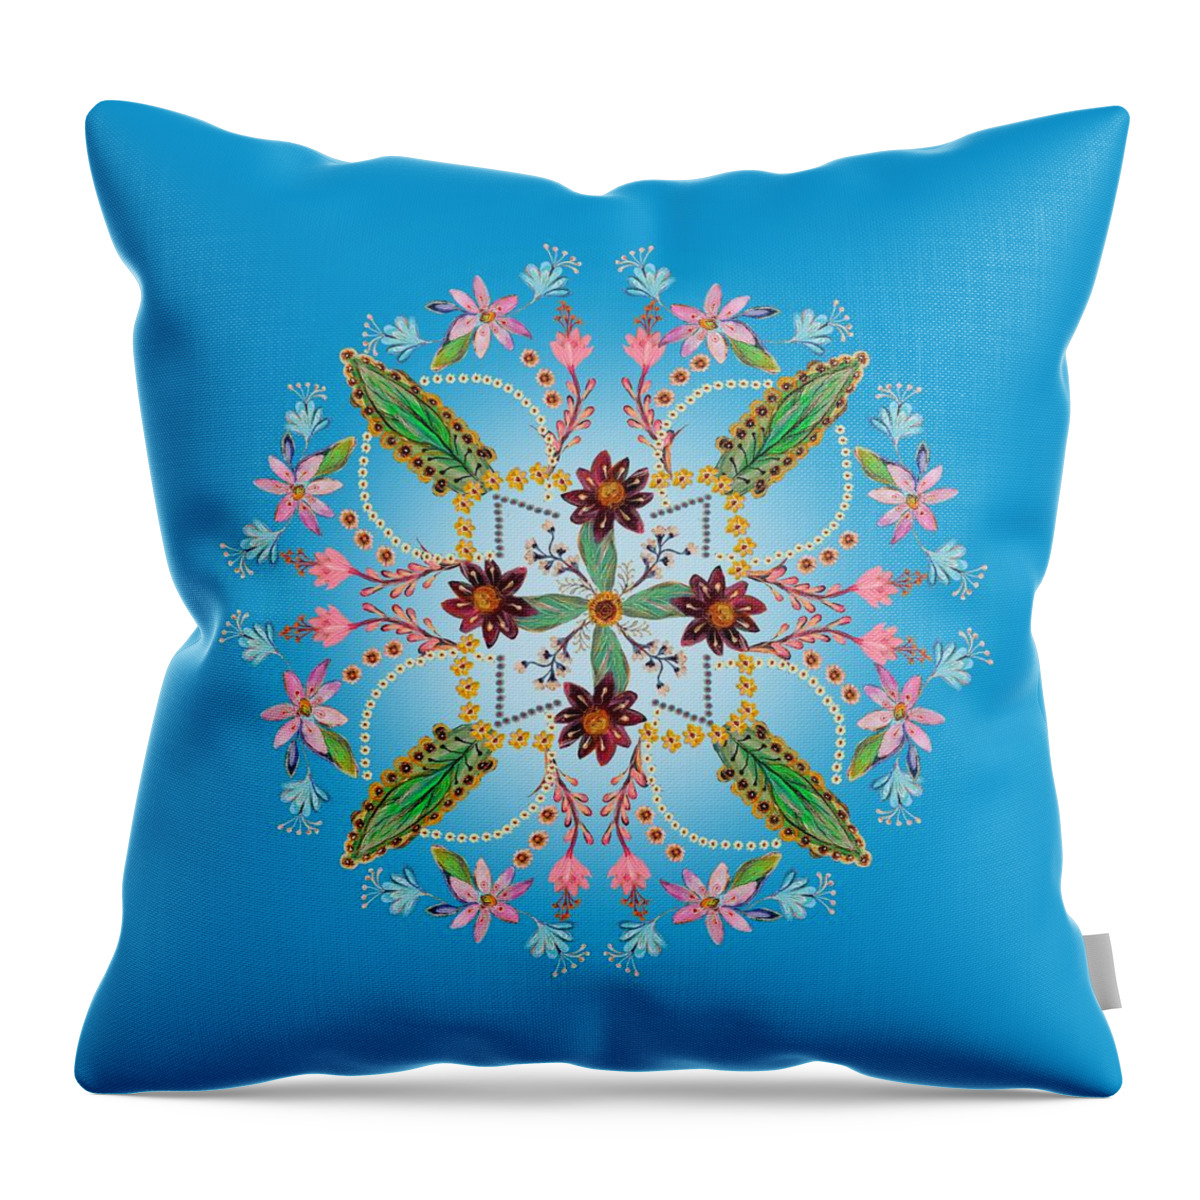 Mandala Throw Pillow featuring the painting Mandala flowering series #1. Blue by Elena Kotliarker